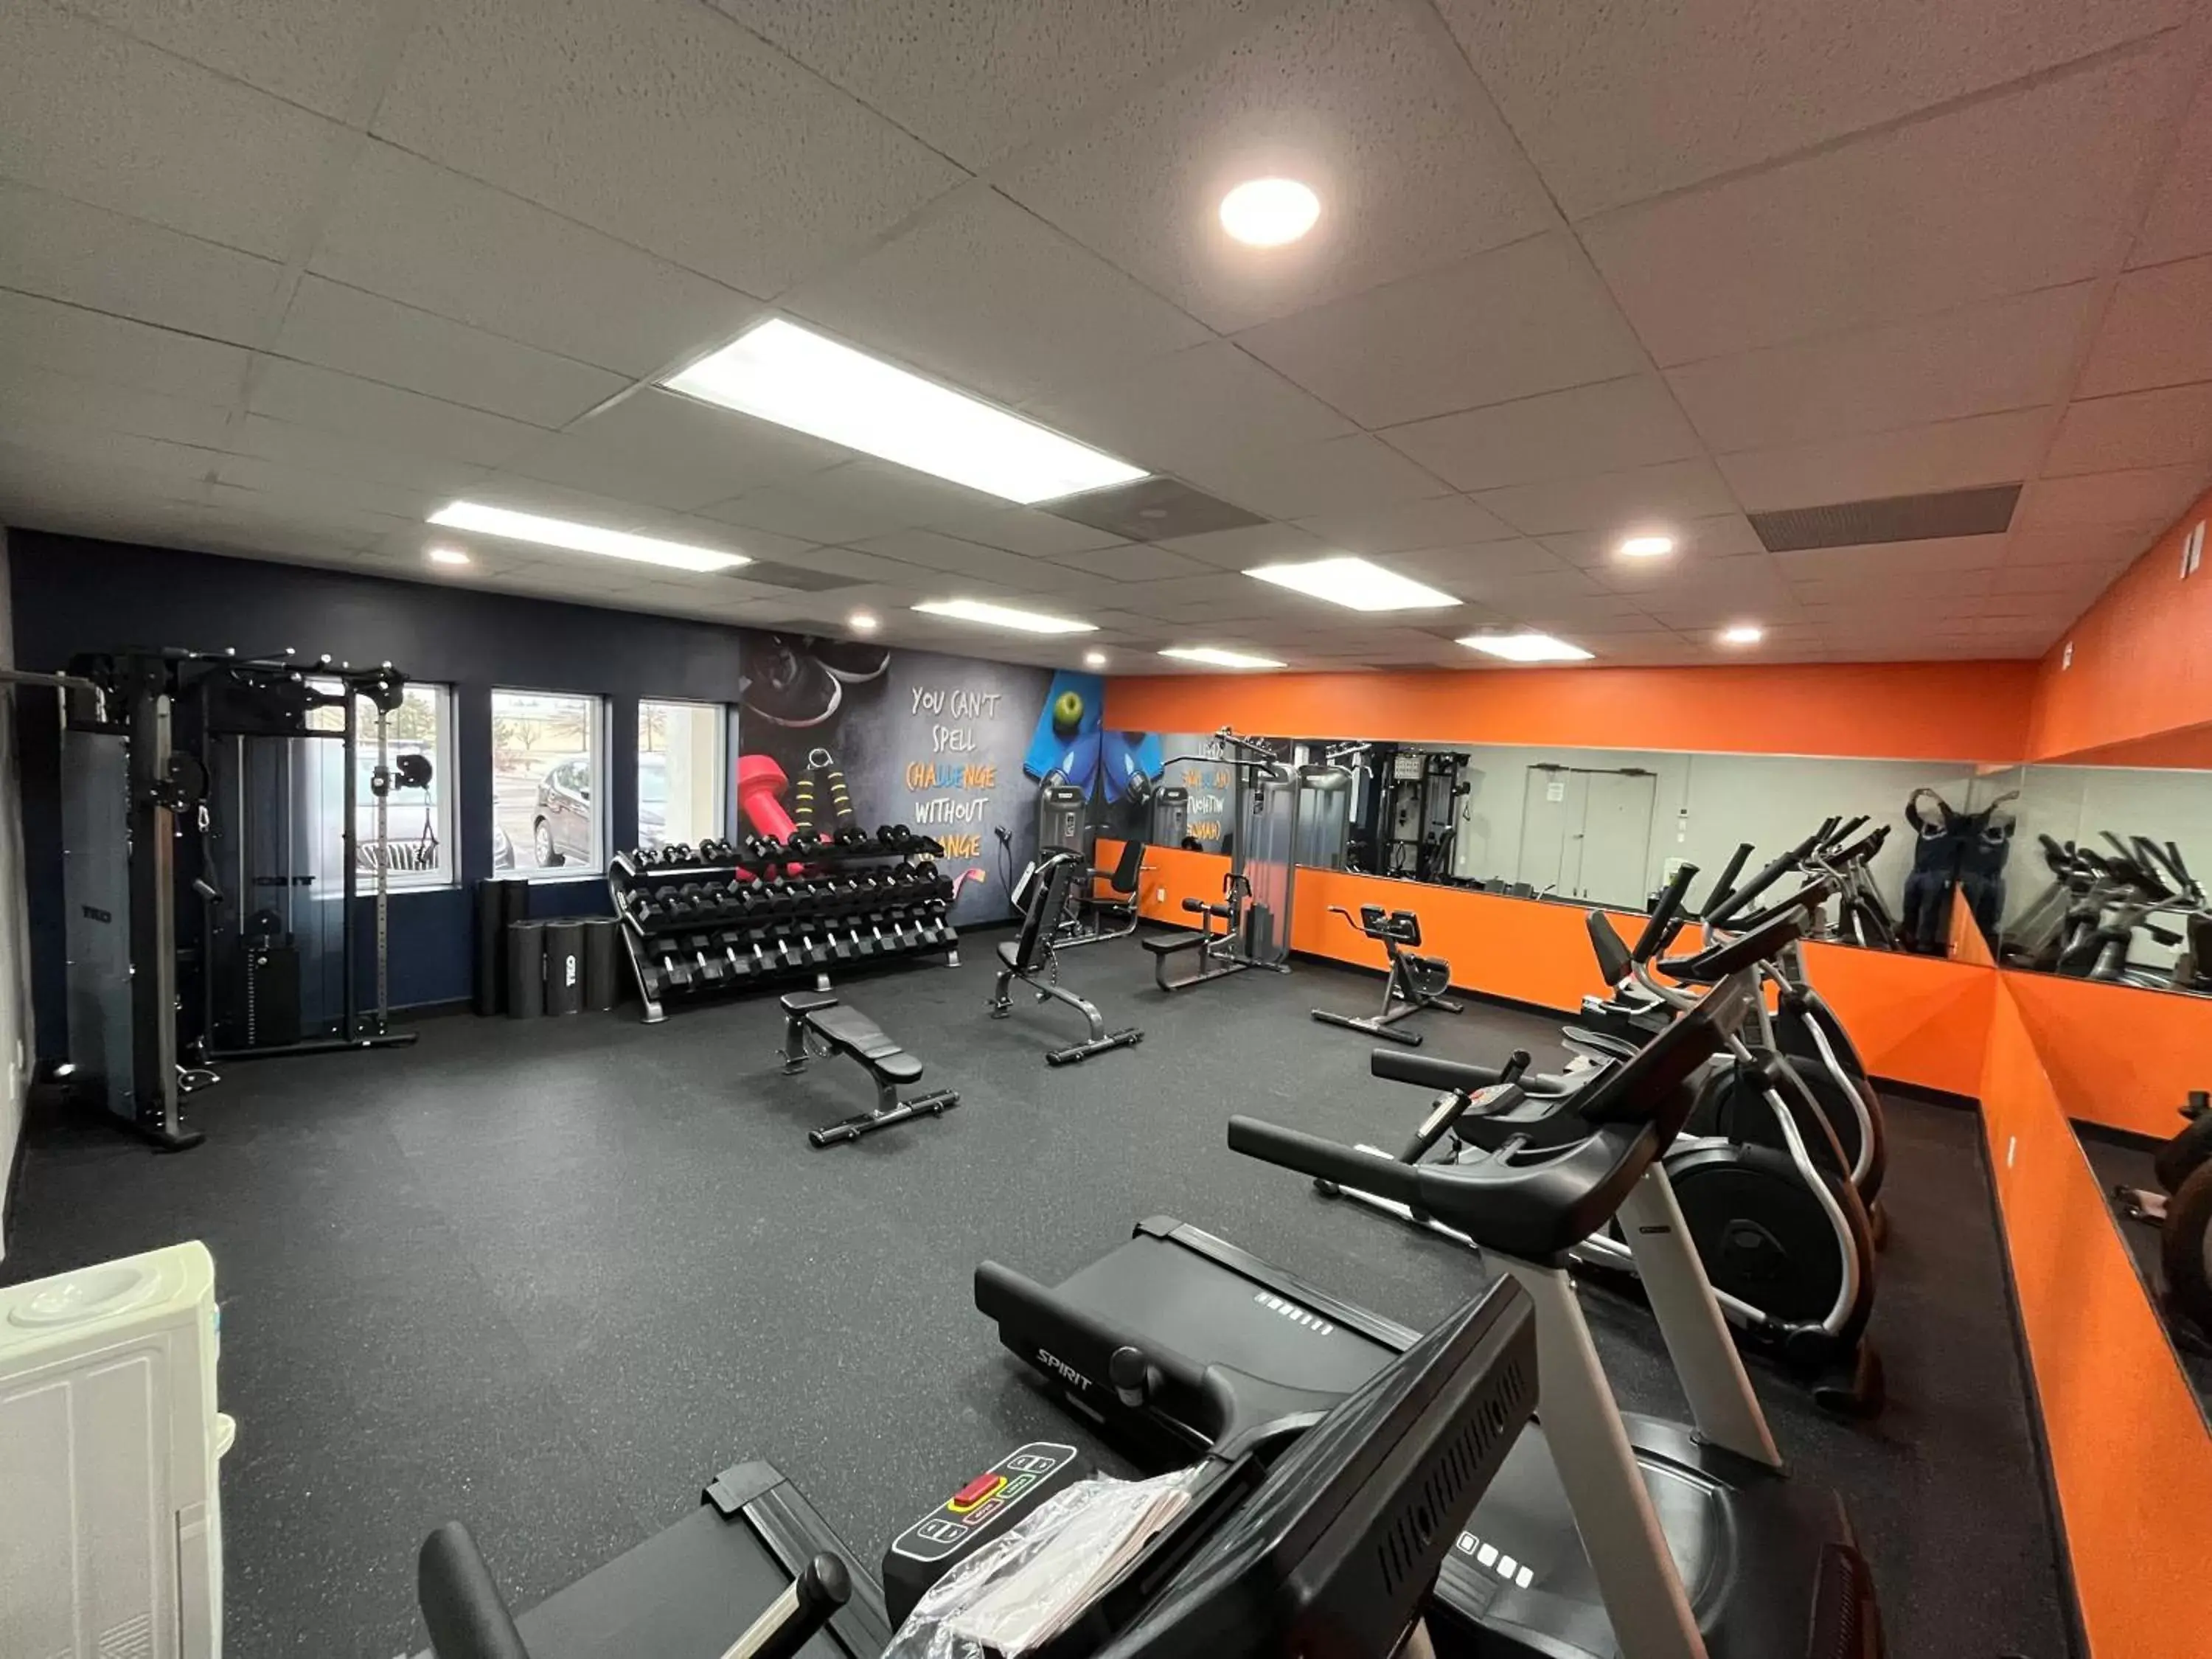 Fitness centre/facilities, Fitness Center/Facilities in Orangewood Inn & Suites Kansas City Airport